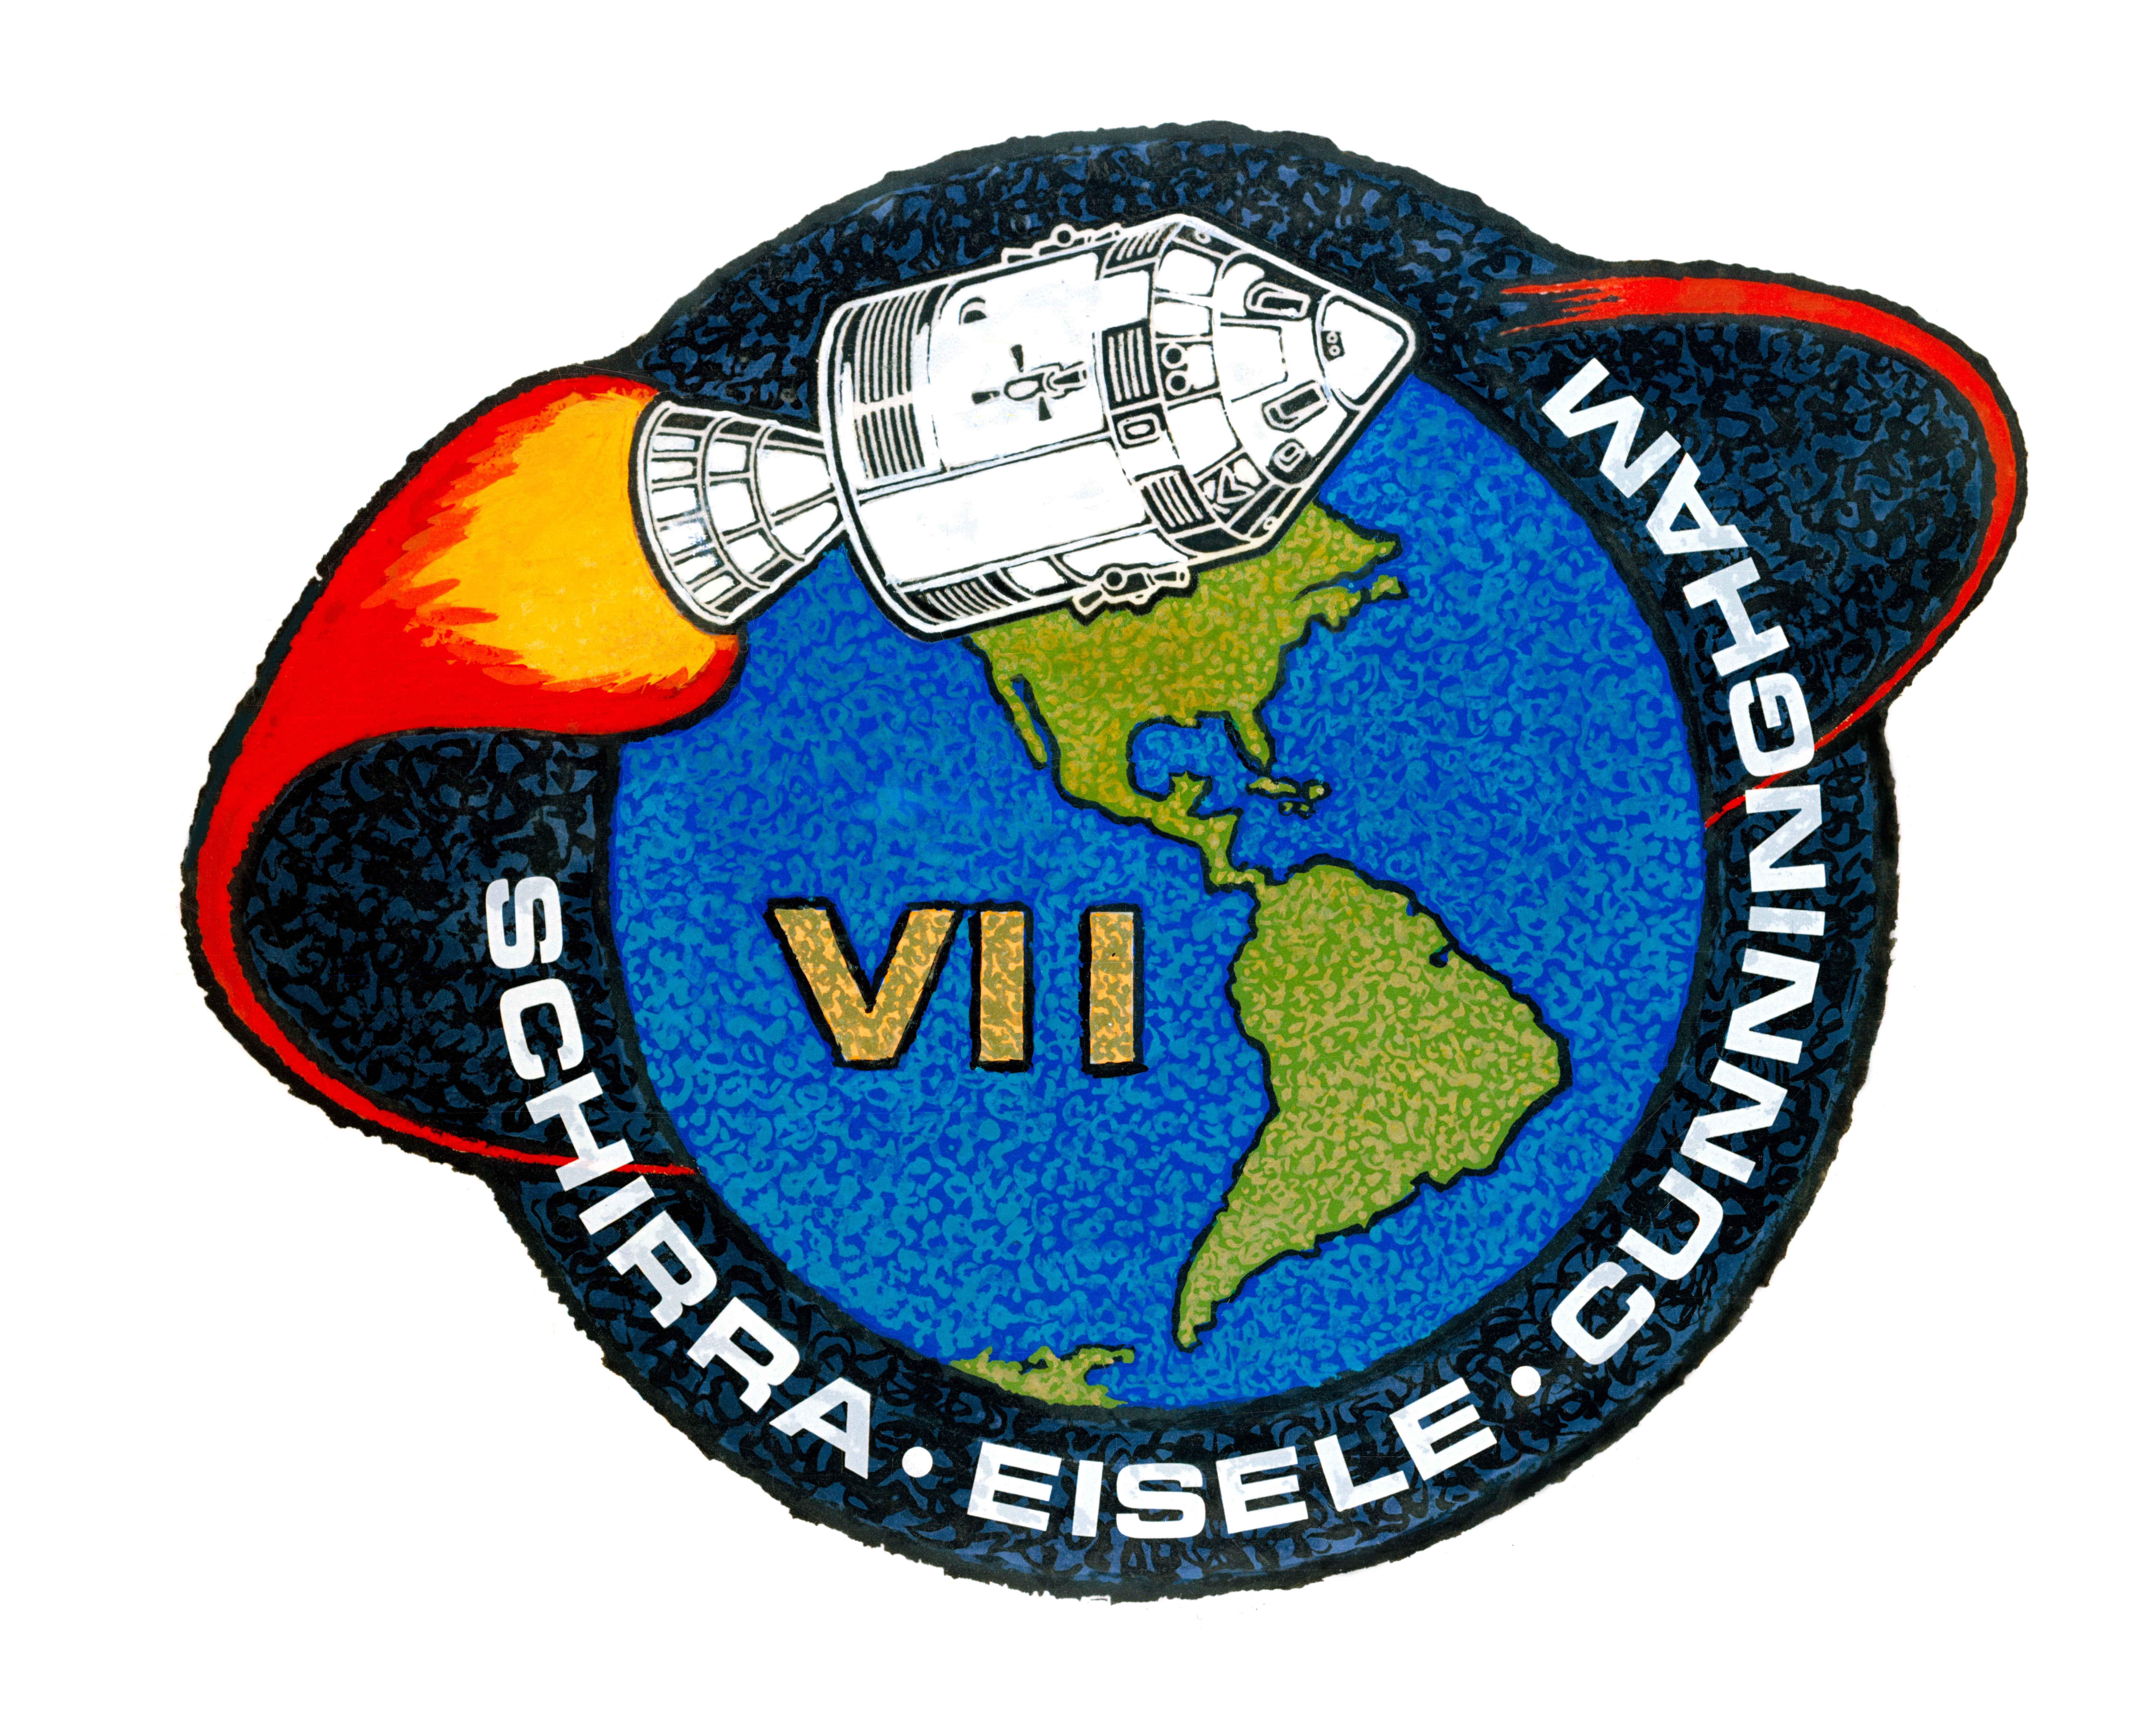  official emblem of Apollo 7 